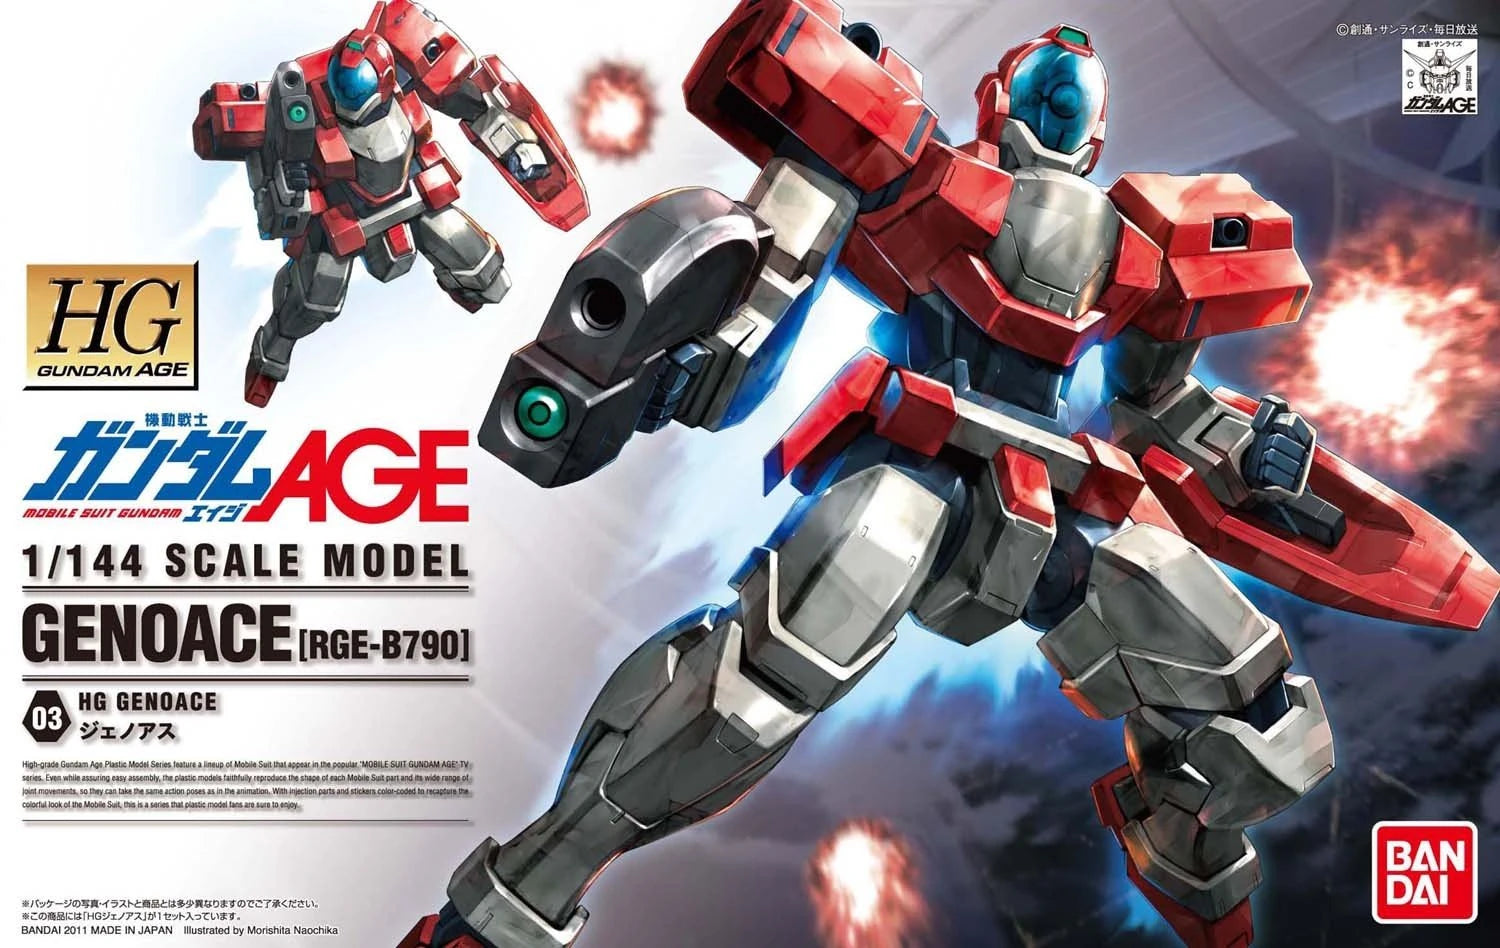 Gundam 1/144 HG AGE #03 RGE-B790 Genoace Model Kit